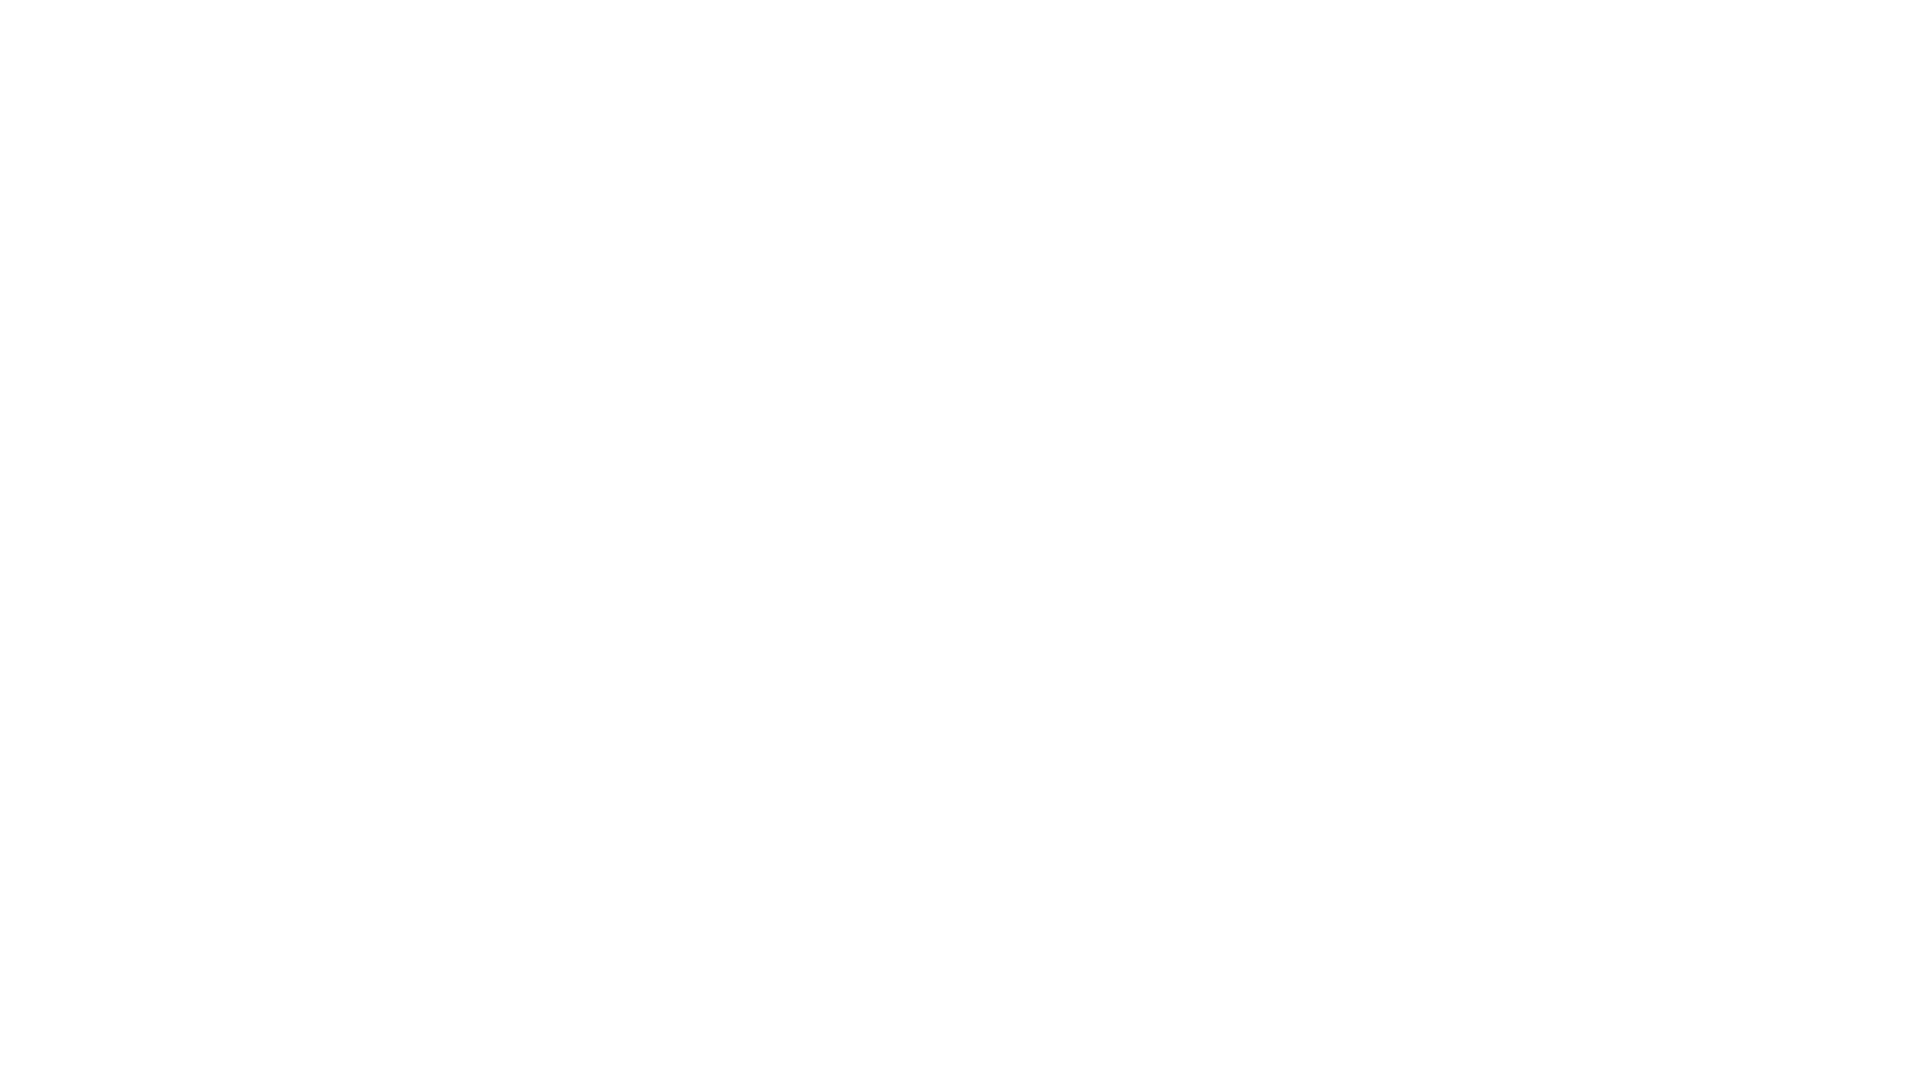 Pocket Trap